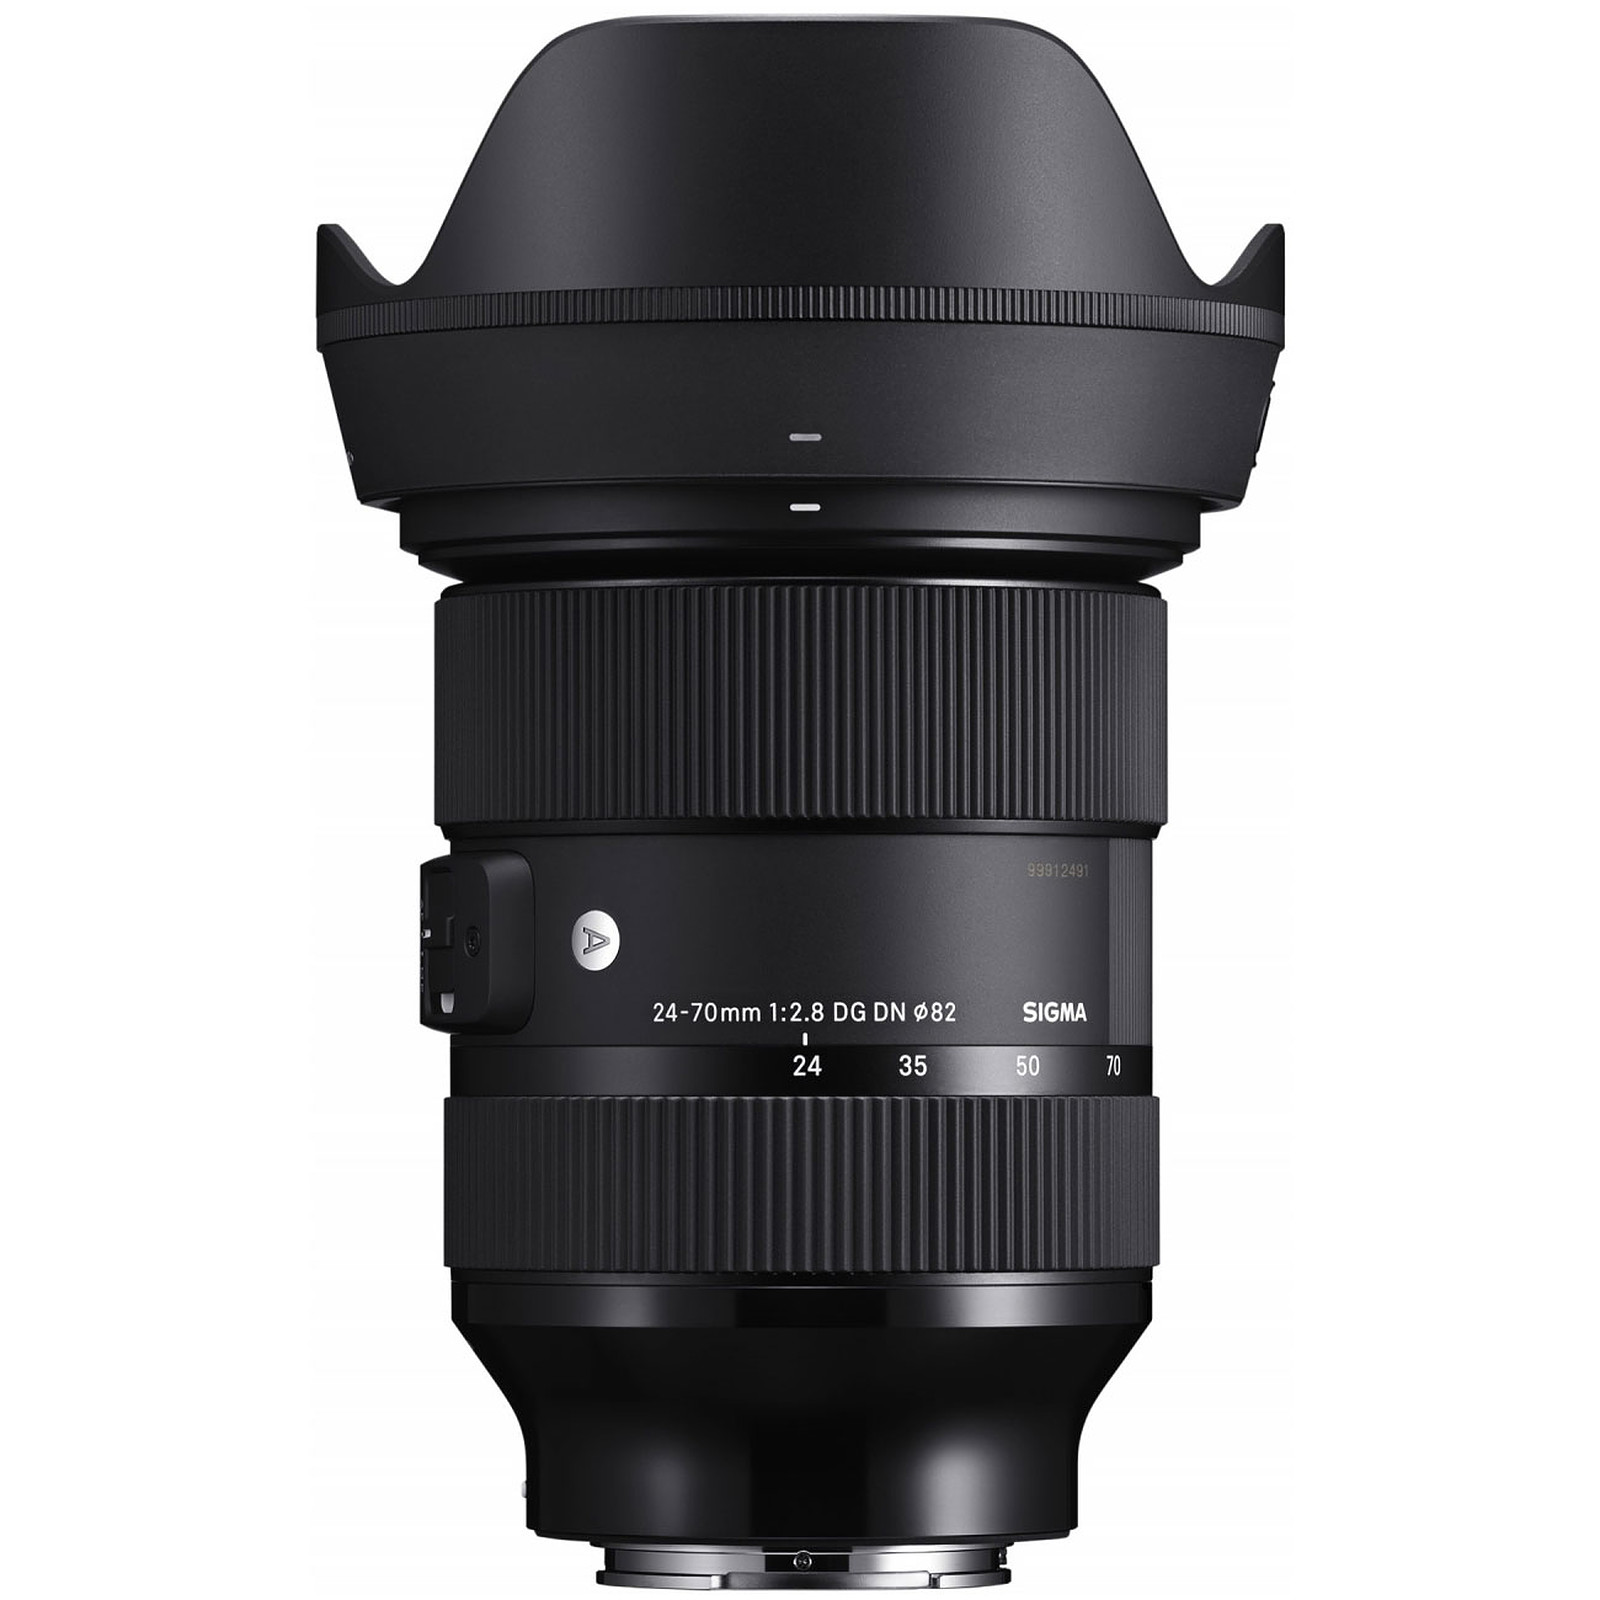 SIGMA 24-70mm f/2.8 DG DN ART monture Sony E - Objectif appareil photo SIGMA